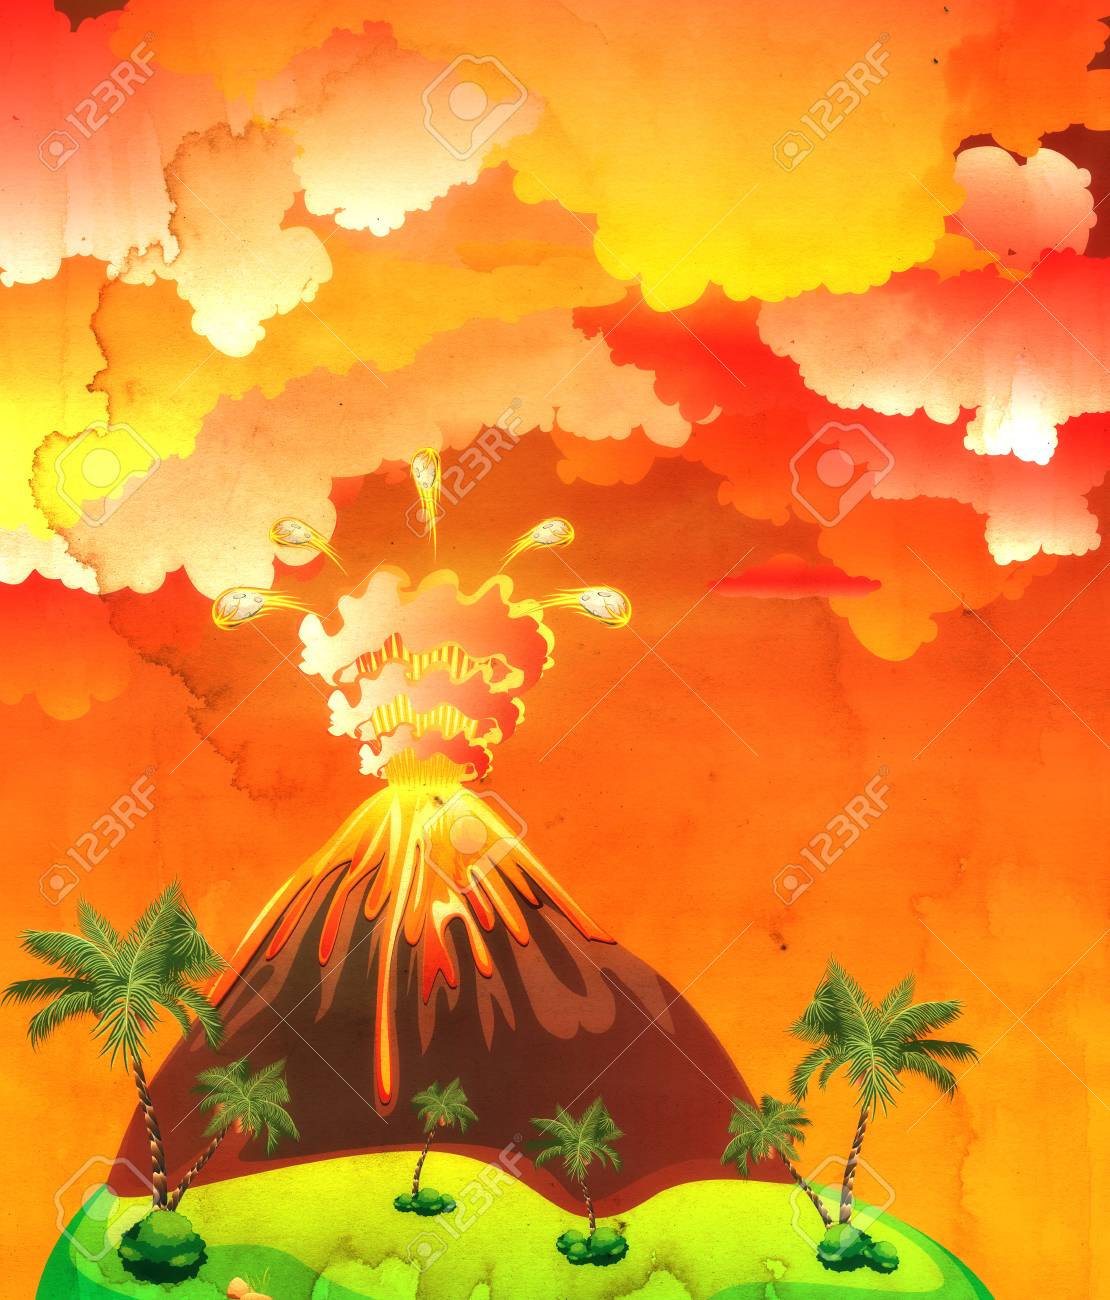 Illustration Of Cartoon Volcano Eruption With Hot Lava Grunge